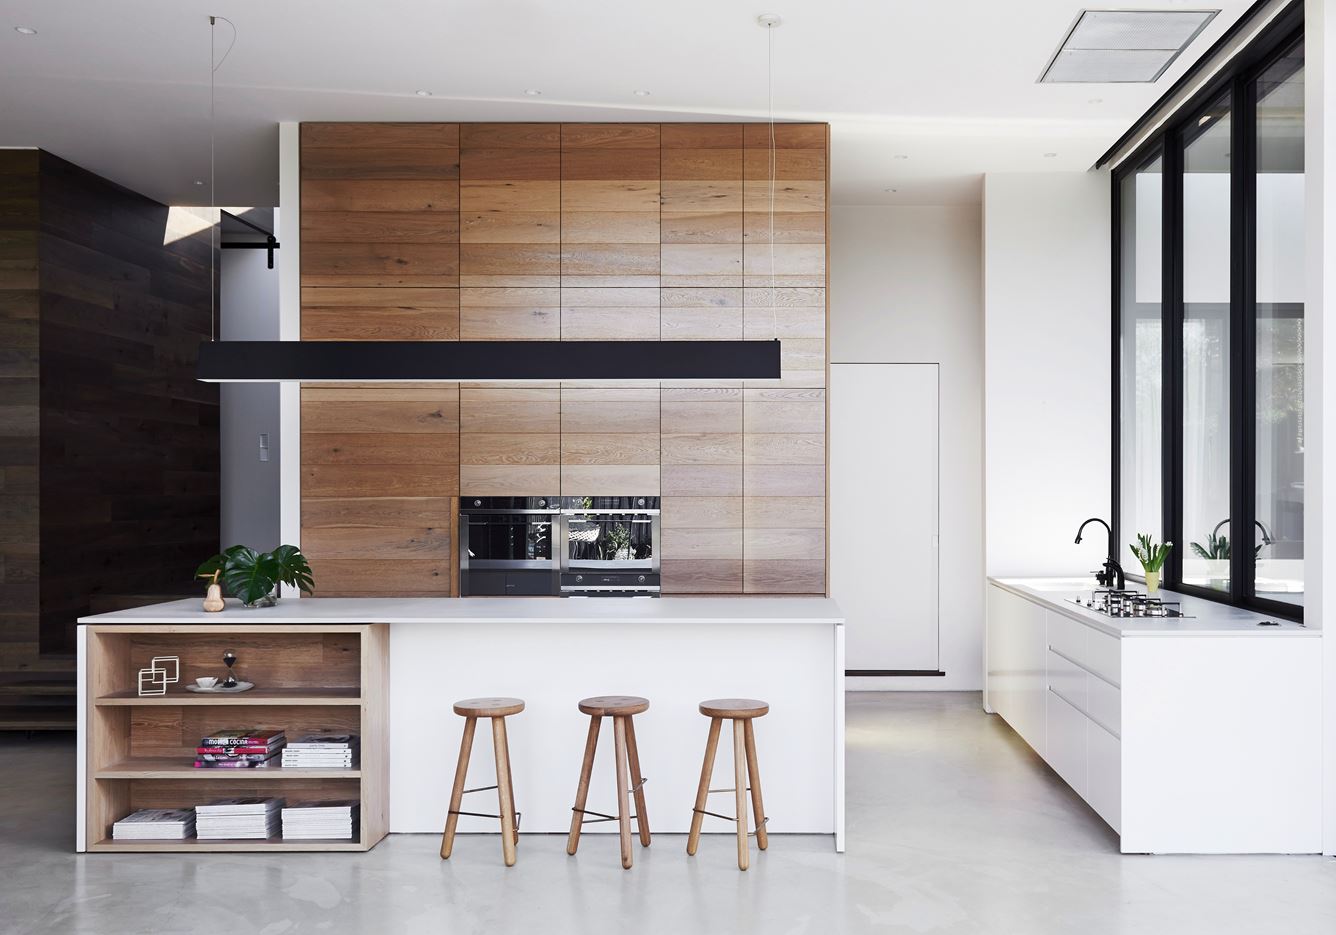 Malvern Residence in Australia by Robson Rak Architects